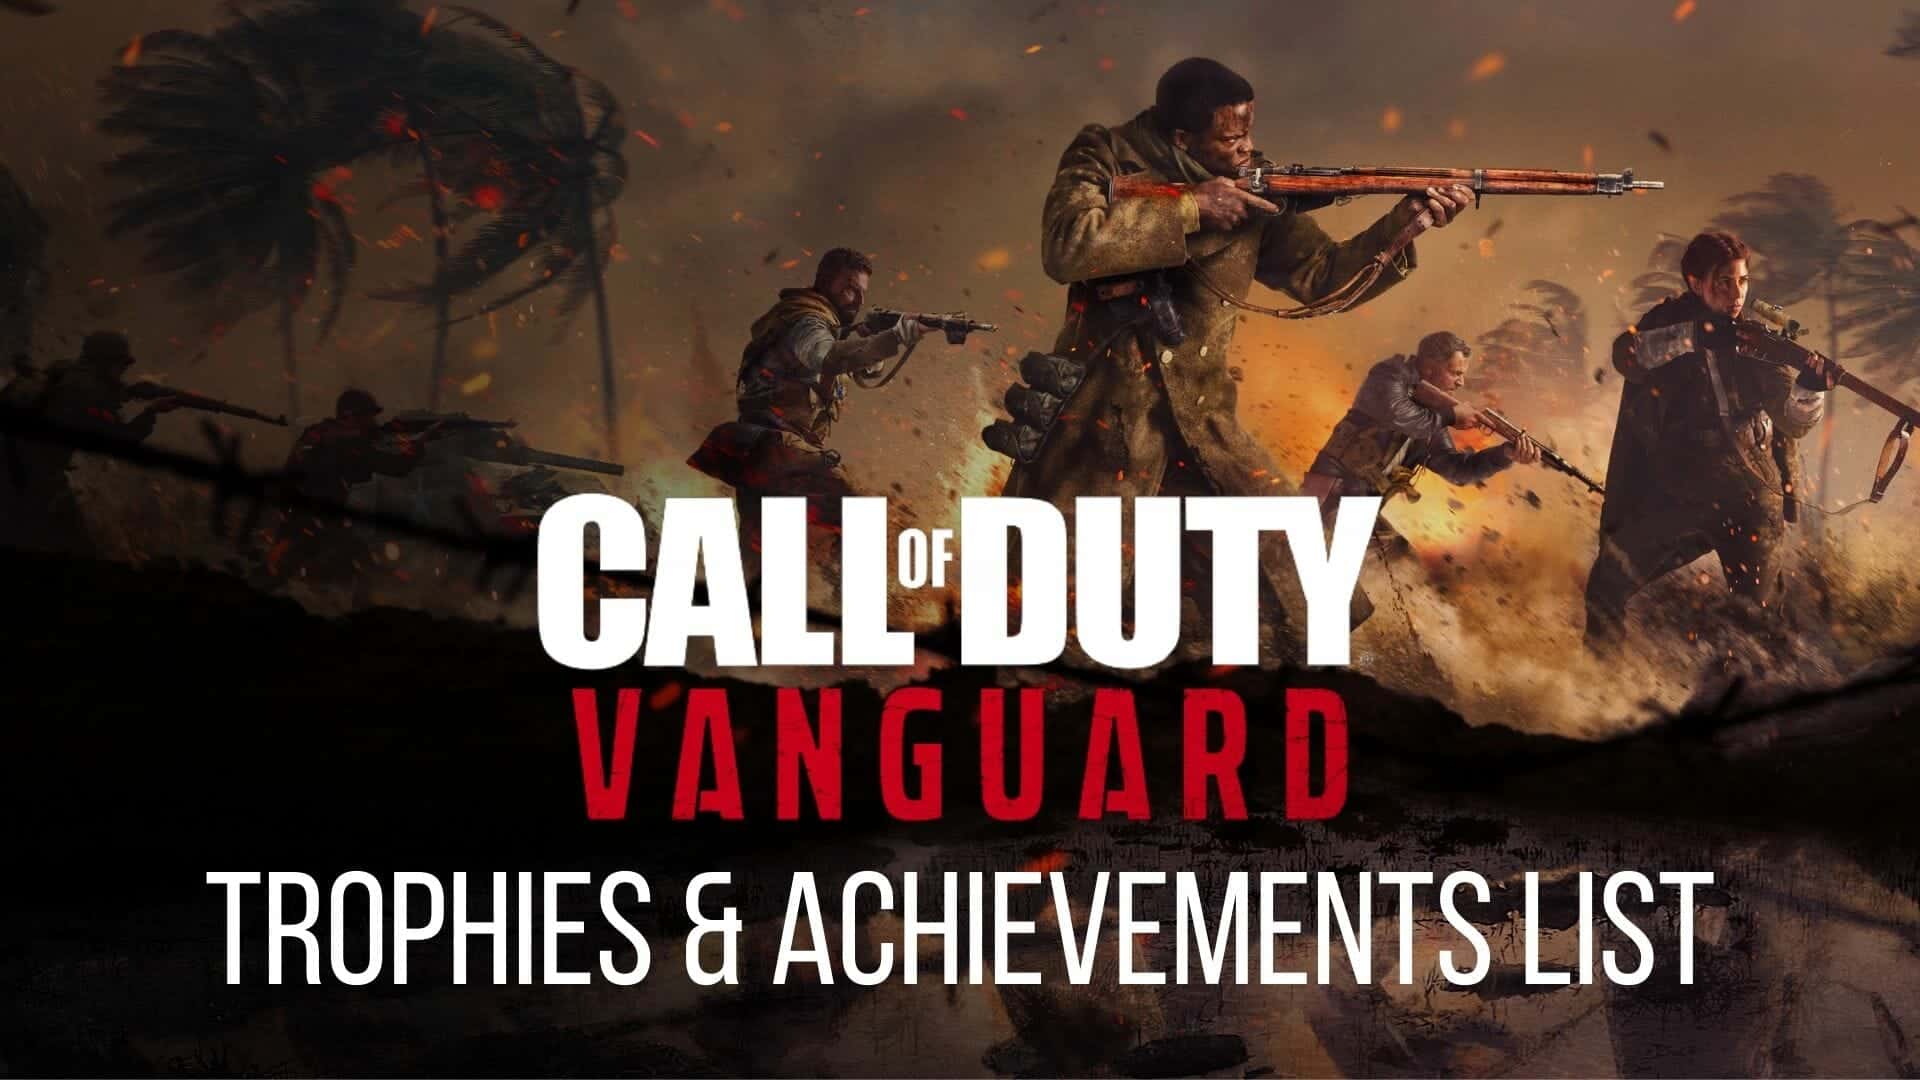 call of duty vanguard logo on screenshot